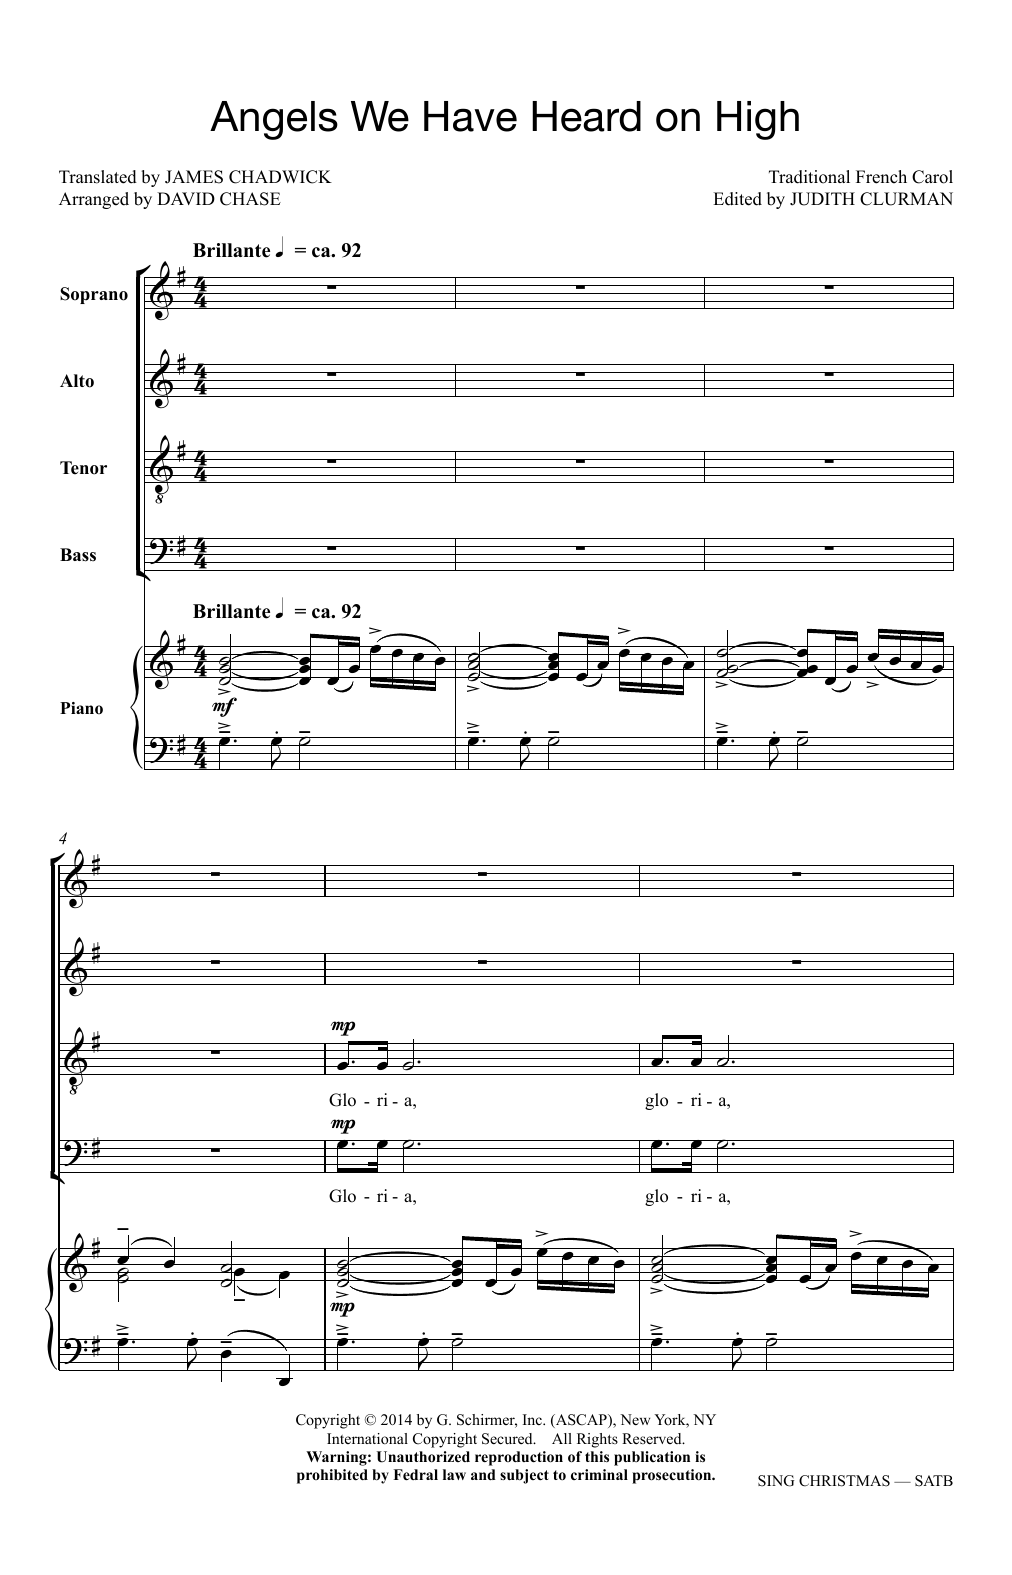 David Chase Sing Christmas: The Carol Arrangements of David Chase Sheet Music Notes & Chords for SATB Choir - Download or Print PDF